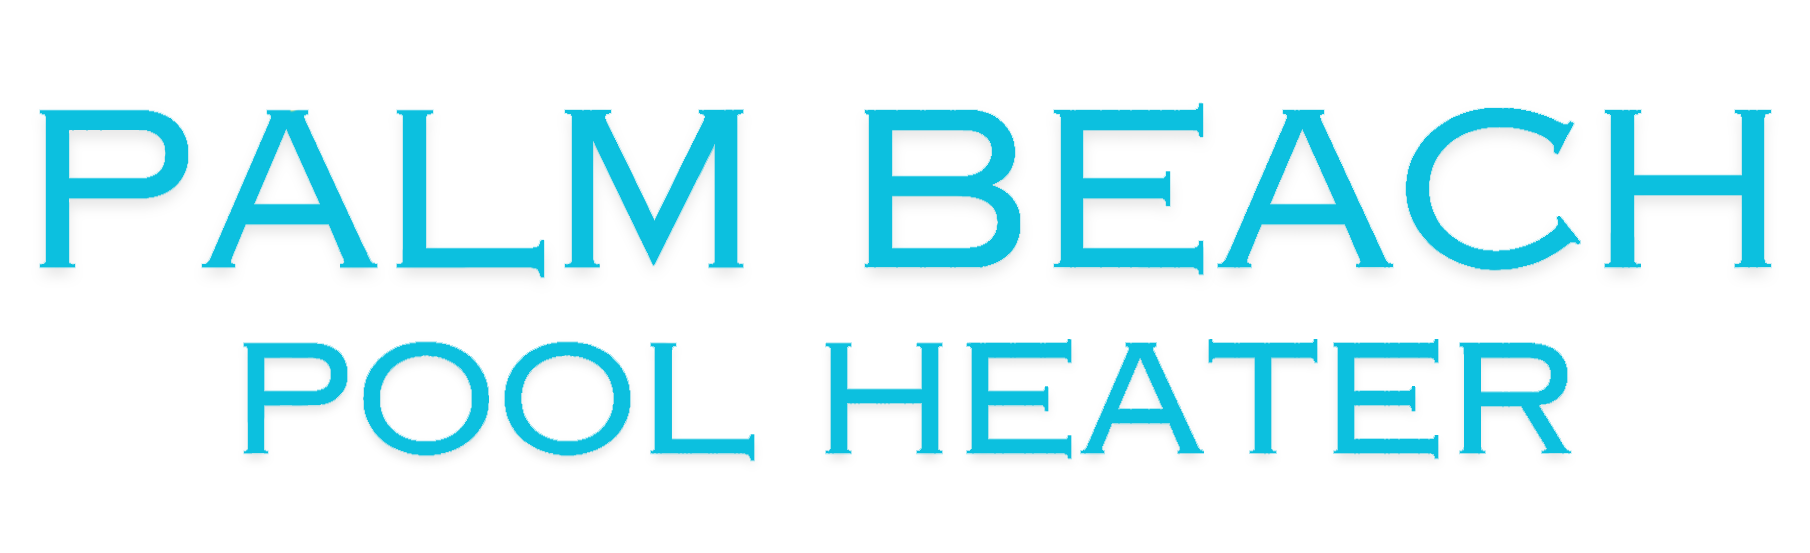 Palm Beach Pool Heater logo